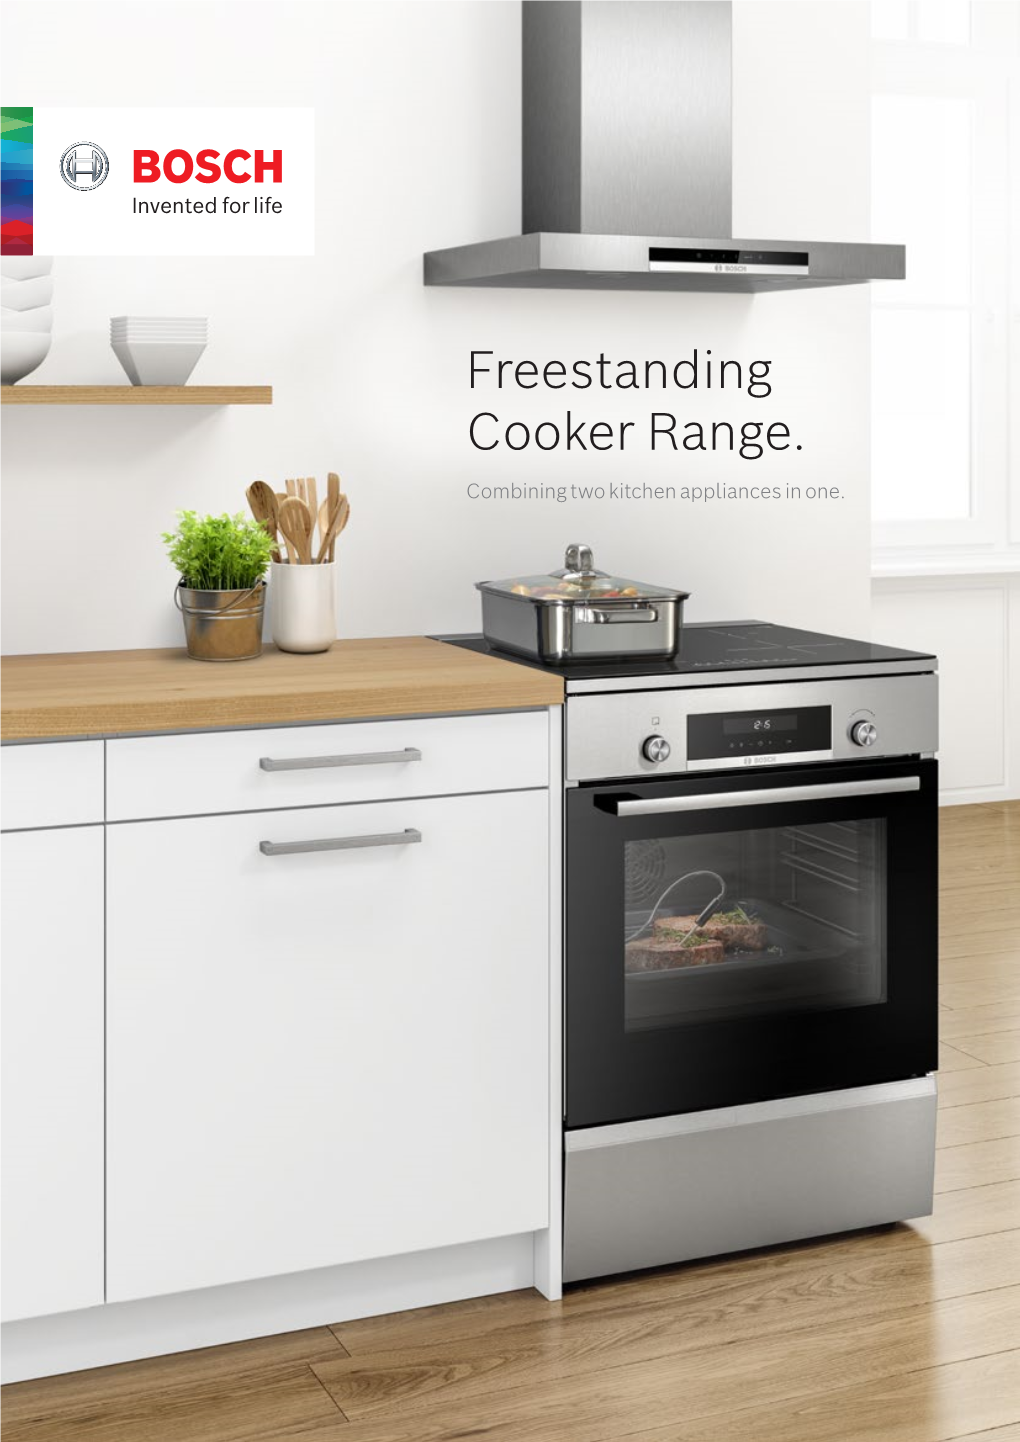 Freestanding Cooker Range